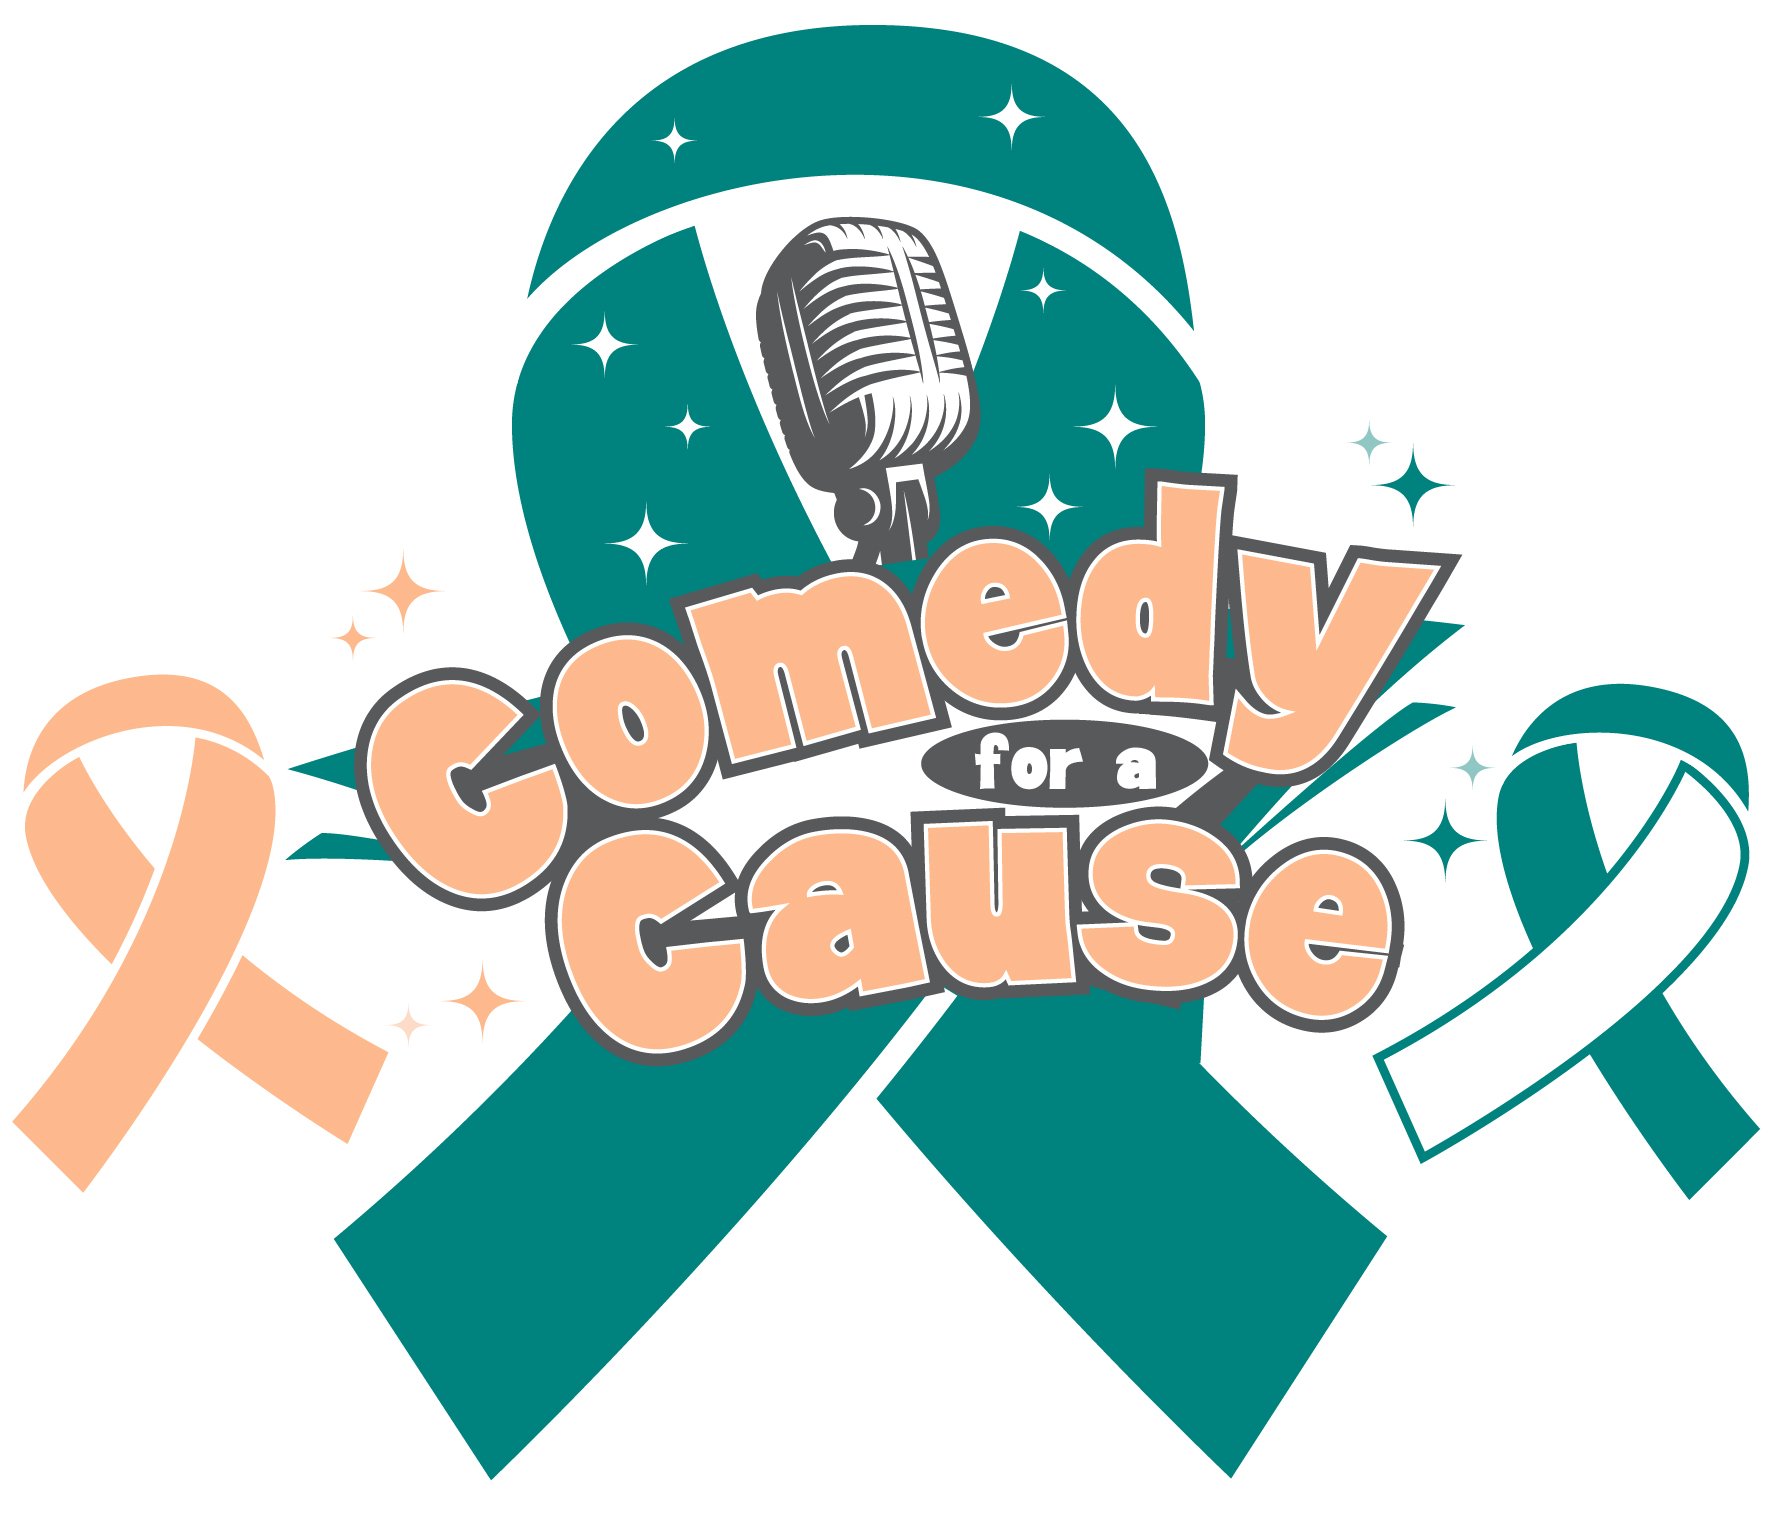 Comedy-for-a-cause-logo